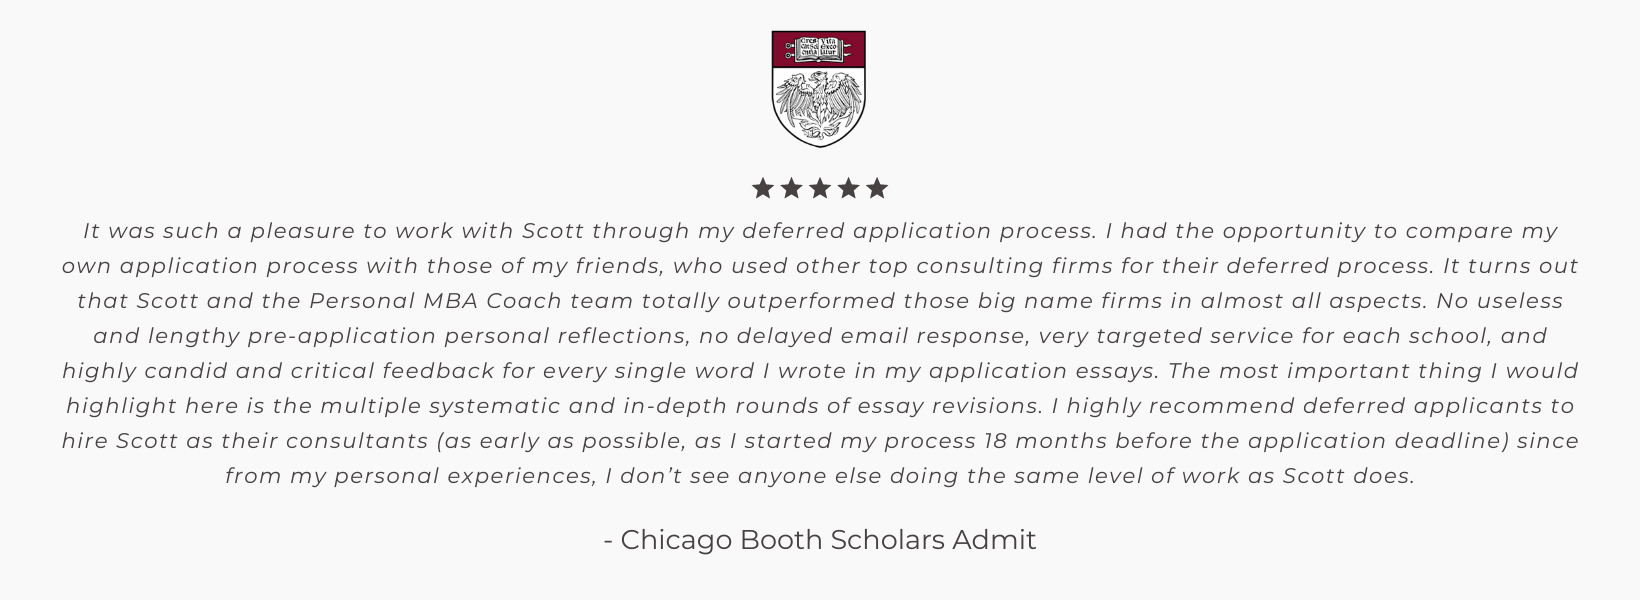 Client testimonial Chicago Booth Scholars admit